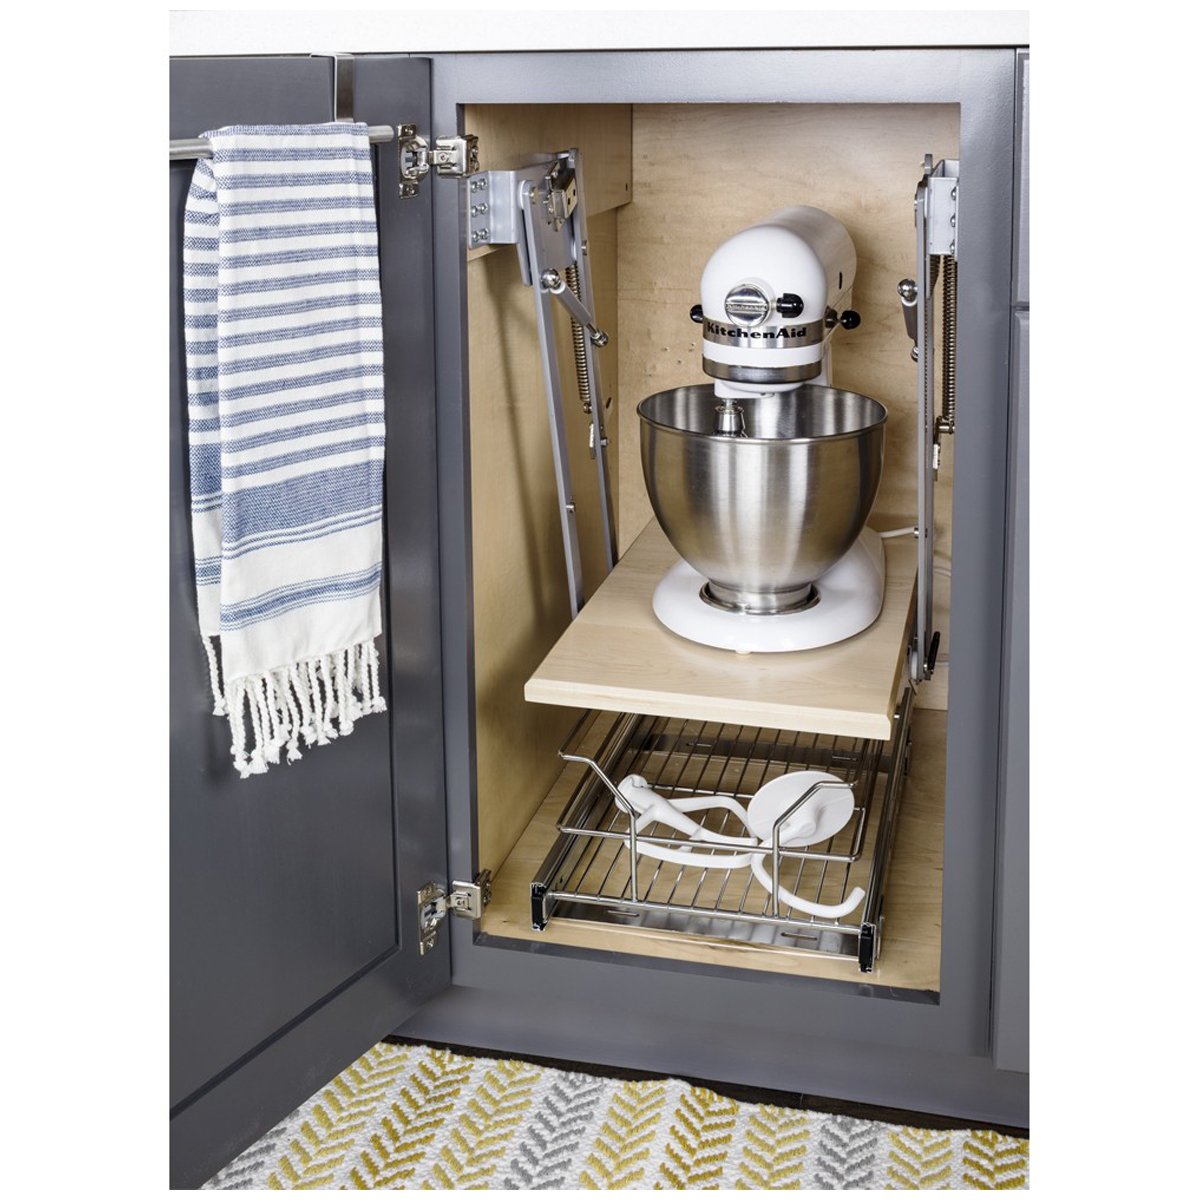 Hardware Resources Soft-close Mixer/Appliance Lift –